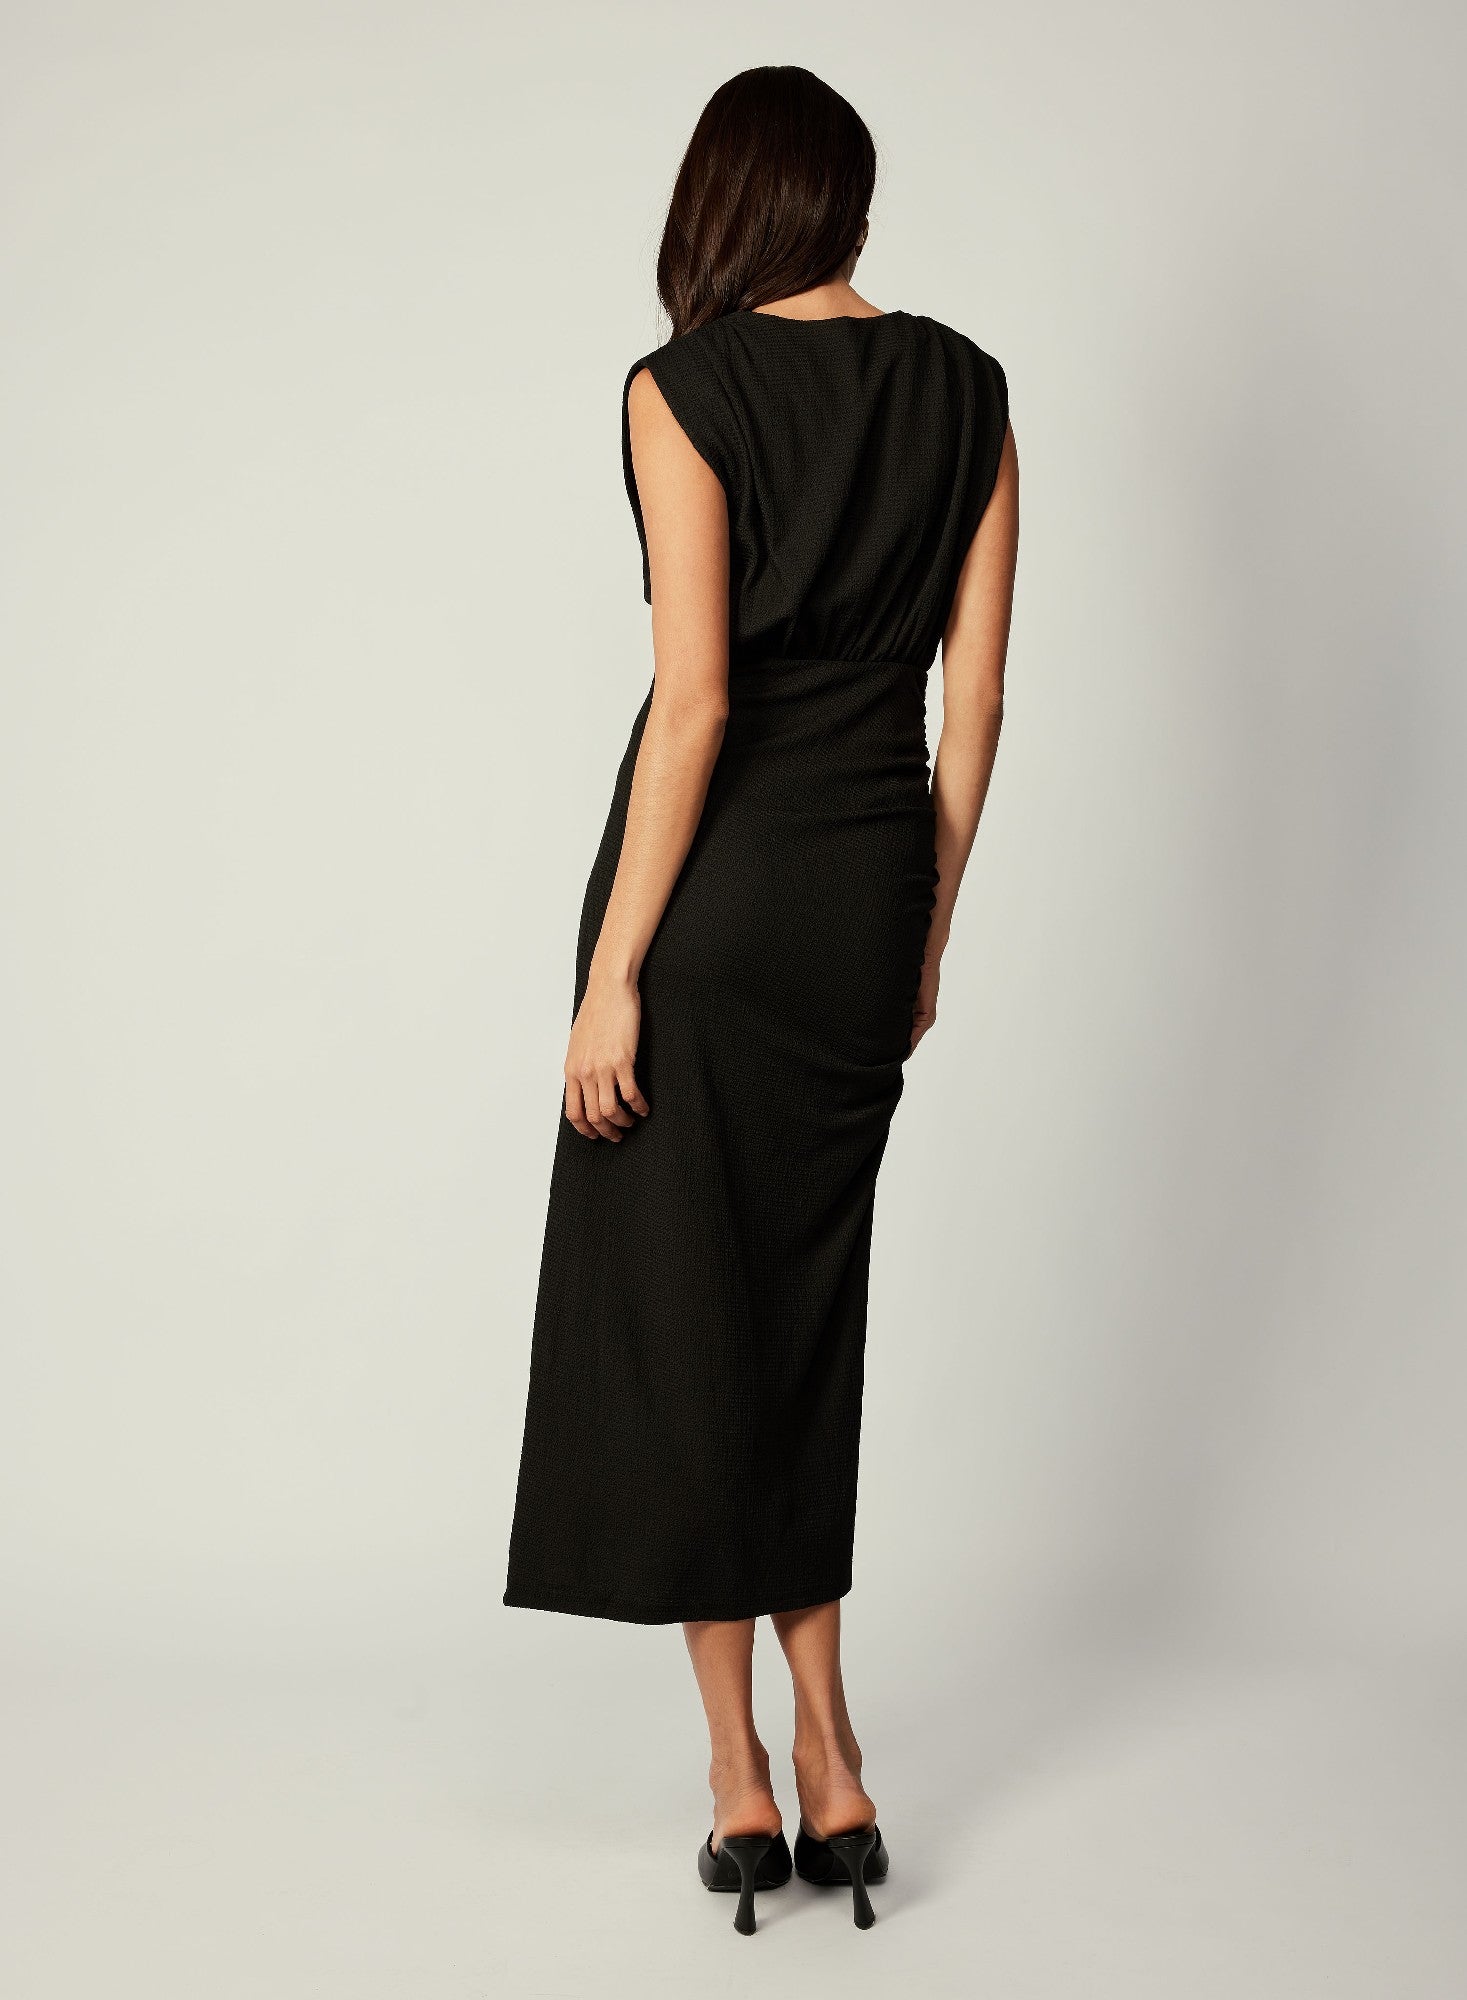 Esmaee Neptune Midi Dress [COLOUR:Black SIZE:S]